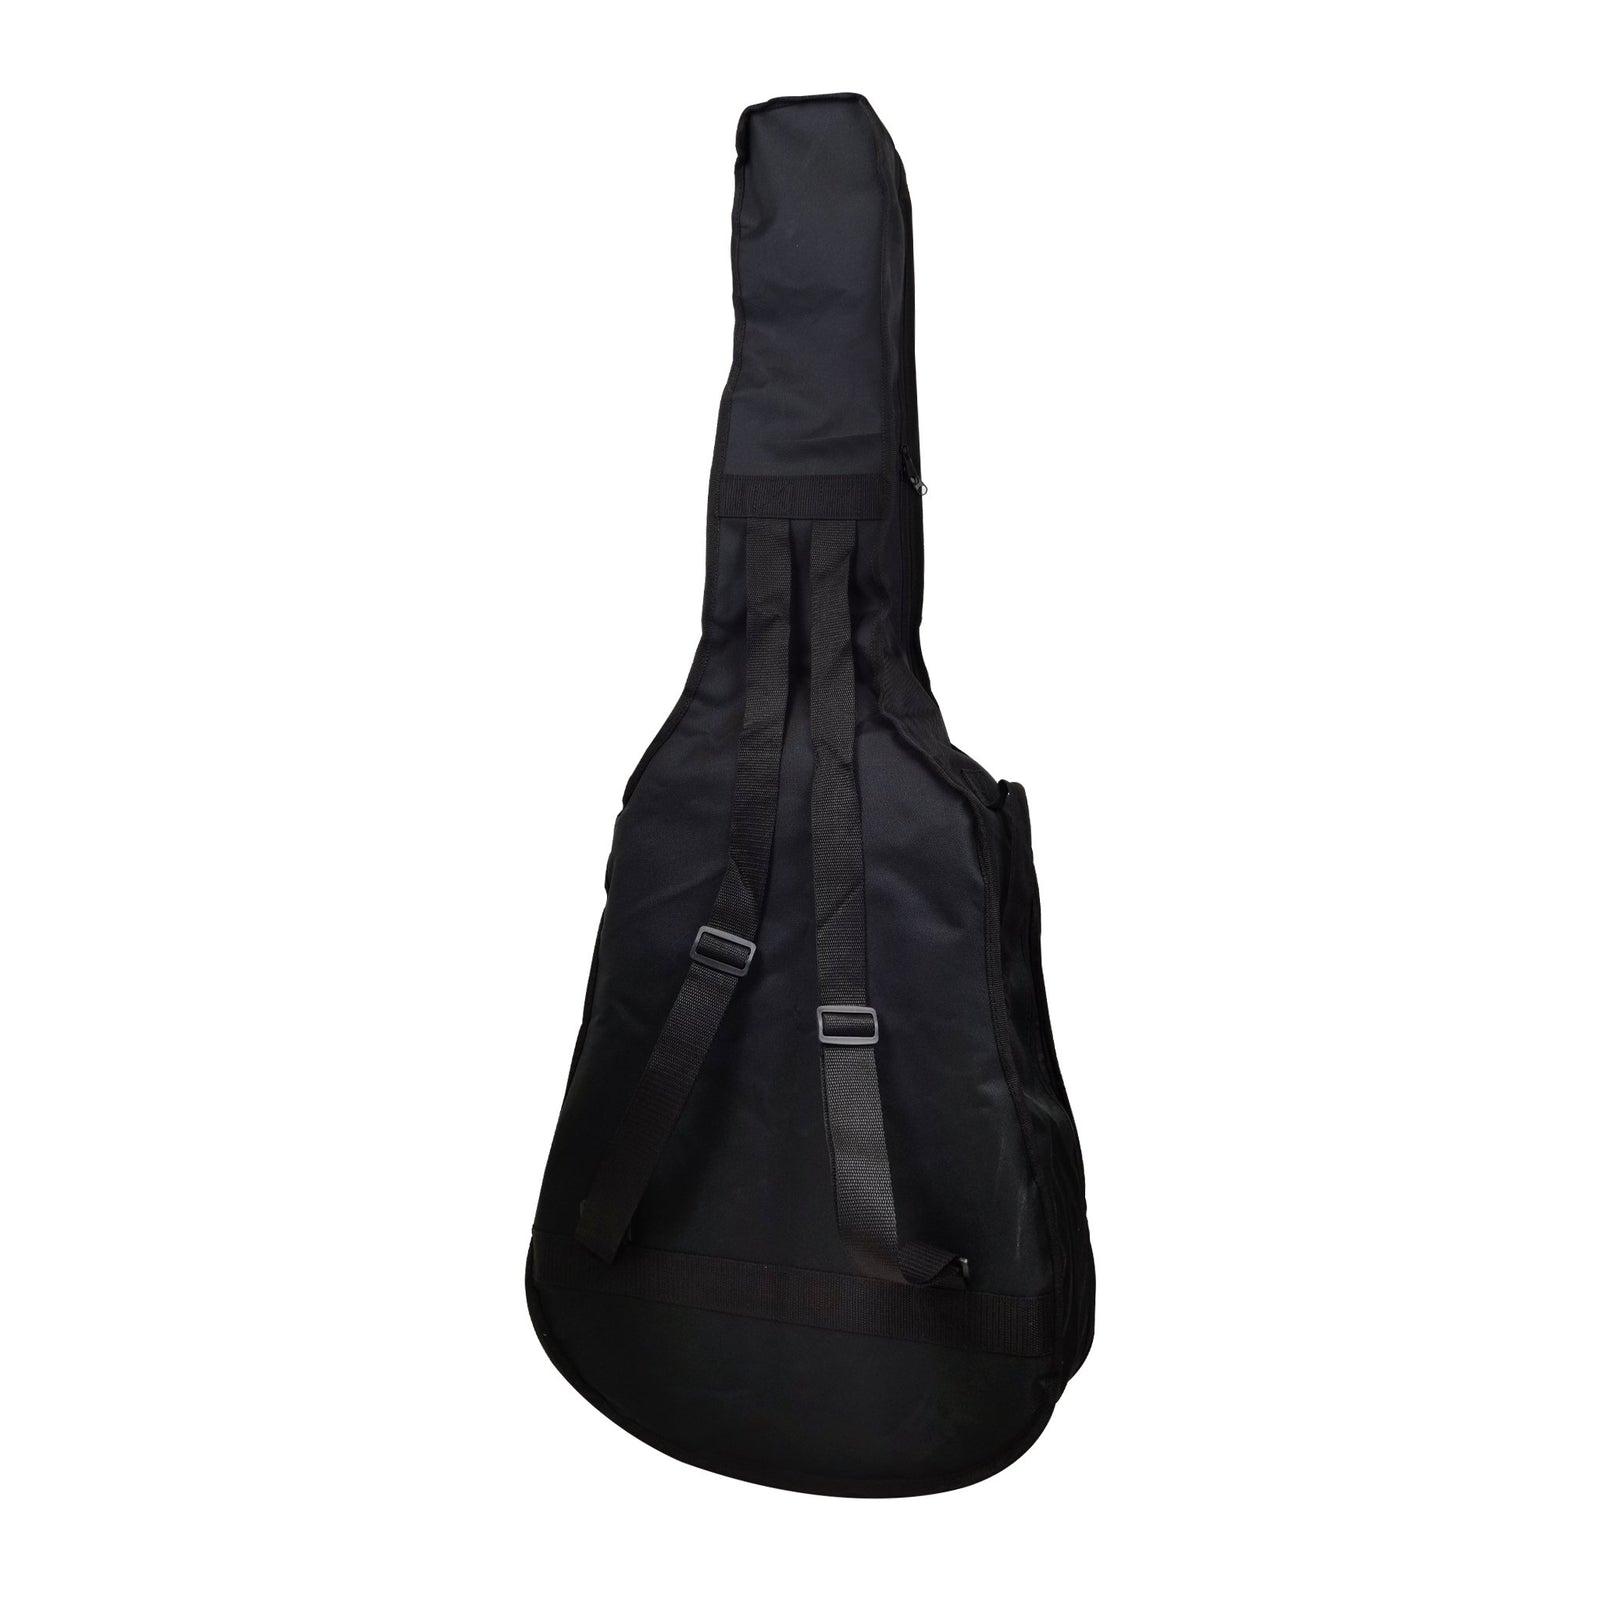 Suzuki SDG-6PK Acoustic Guitar Package Blue (BLS)